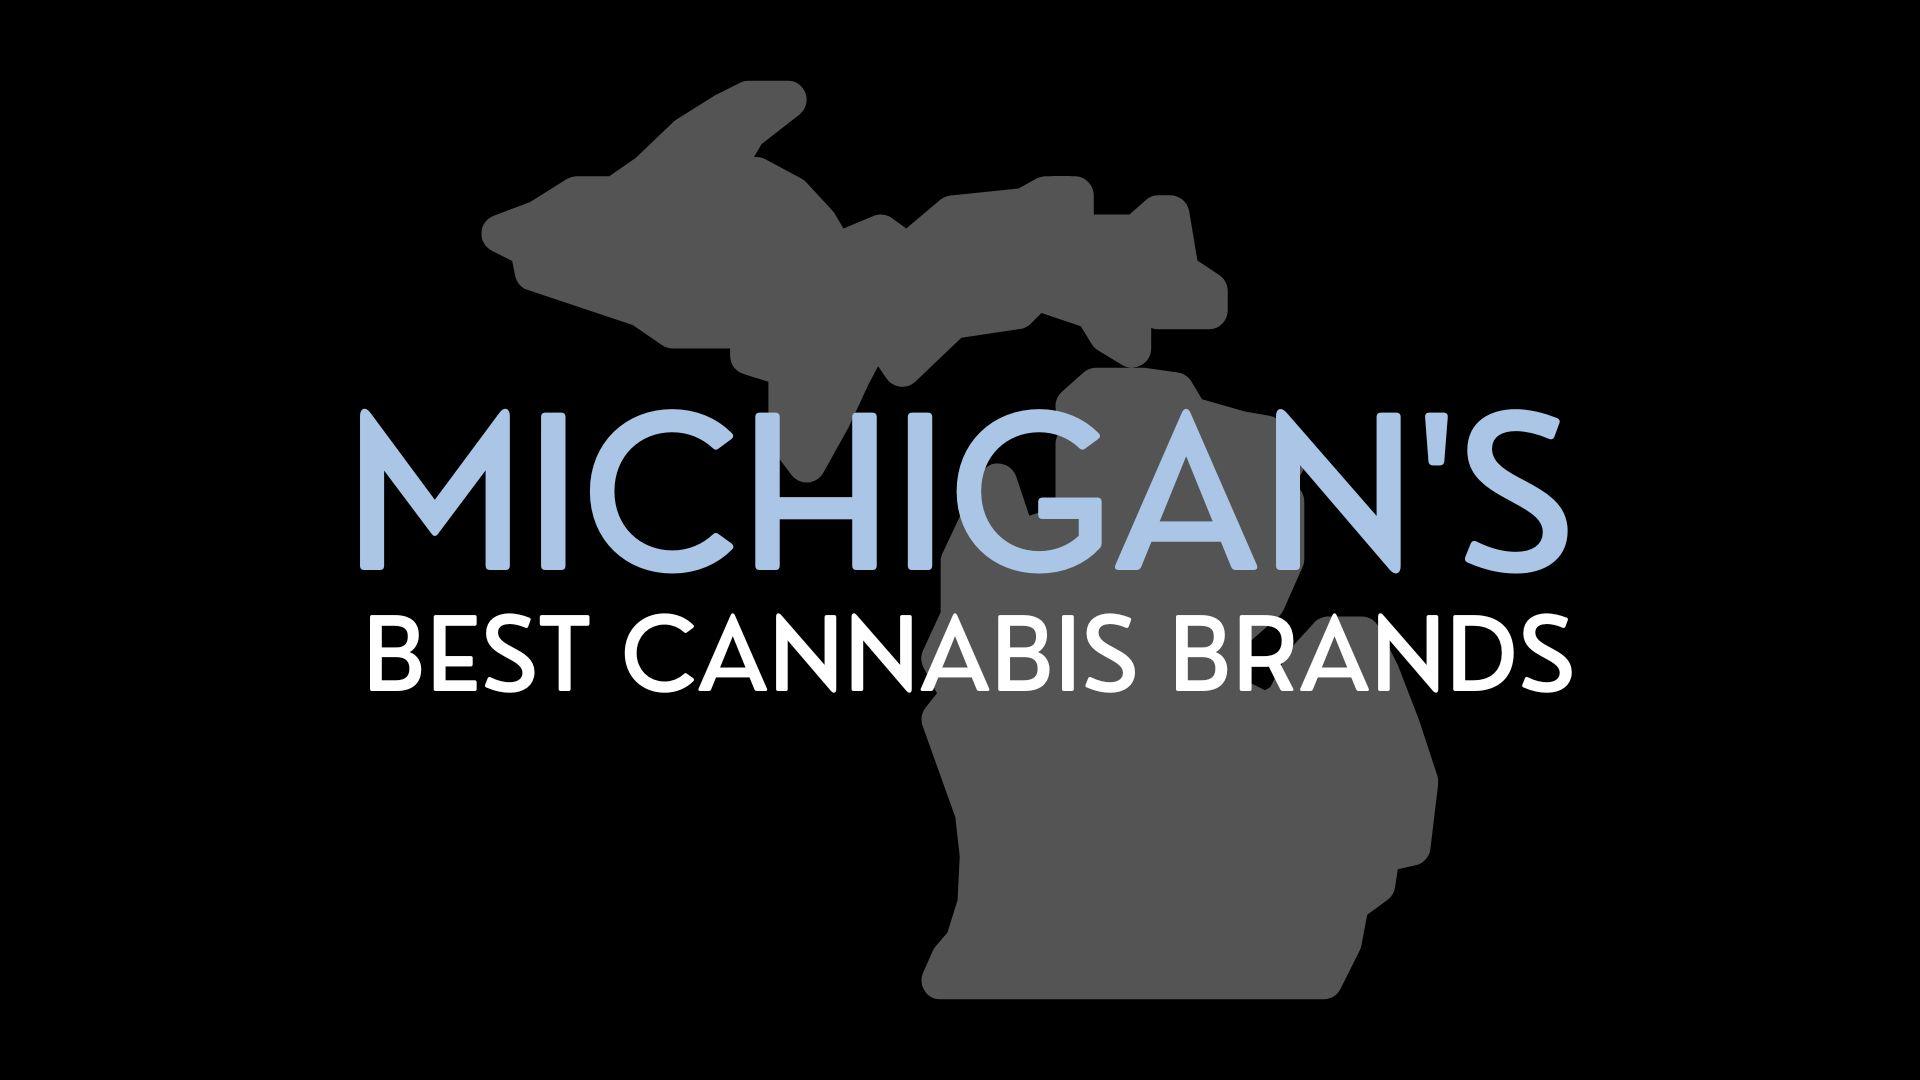 Best Cannabis Brands in Michigan